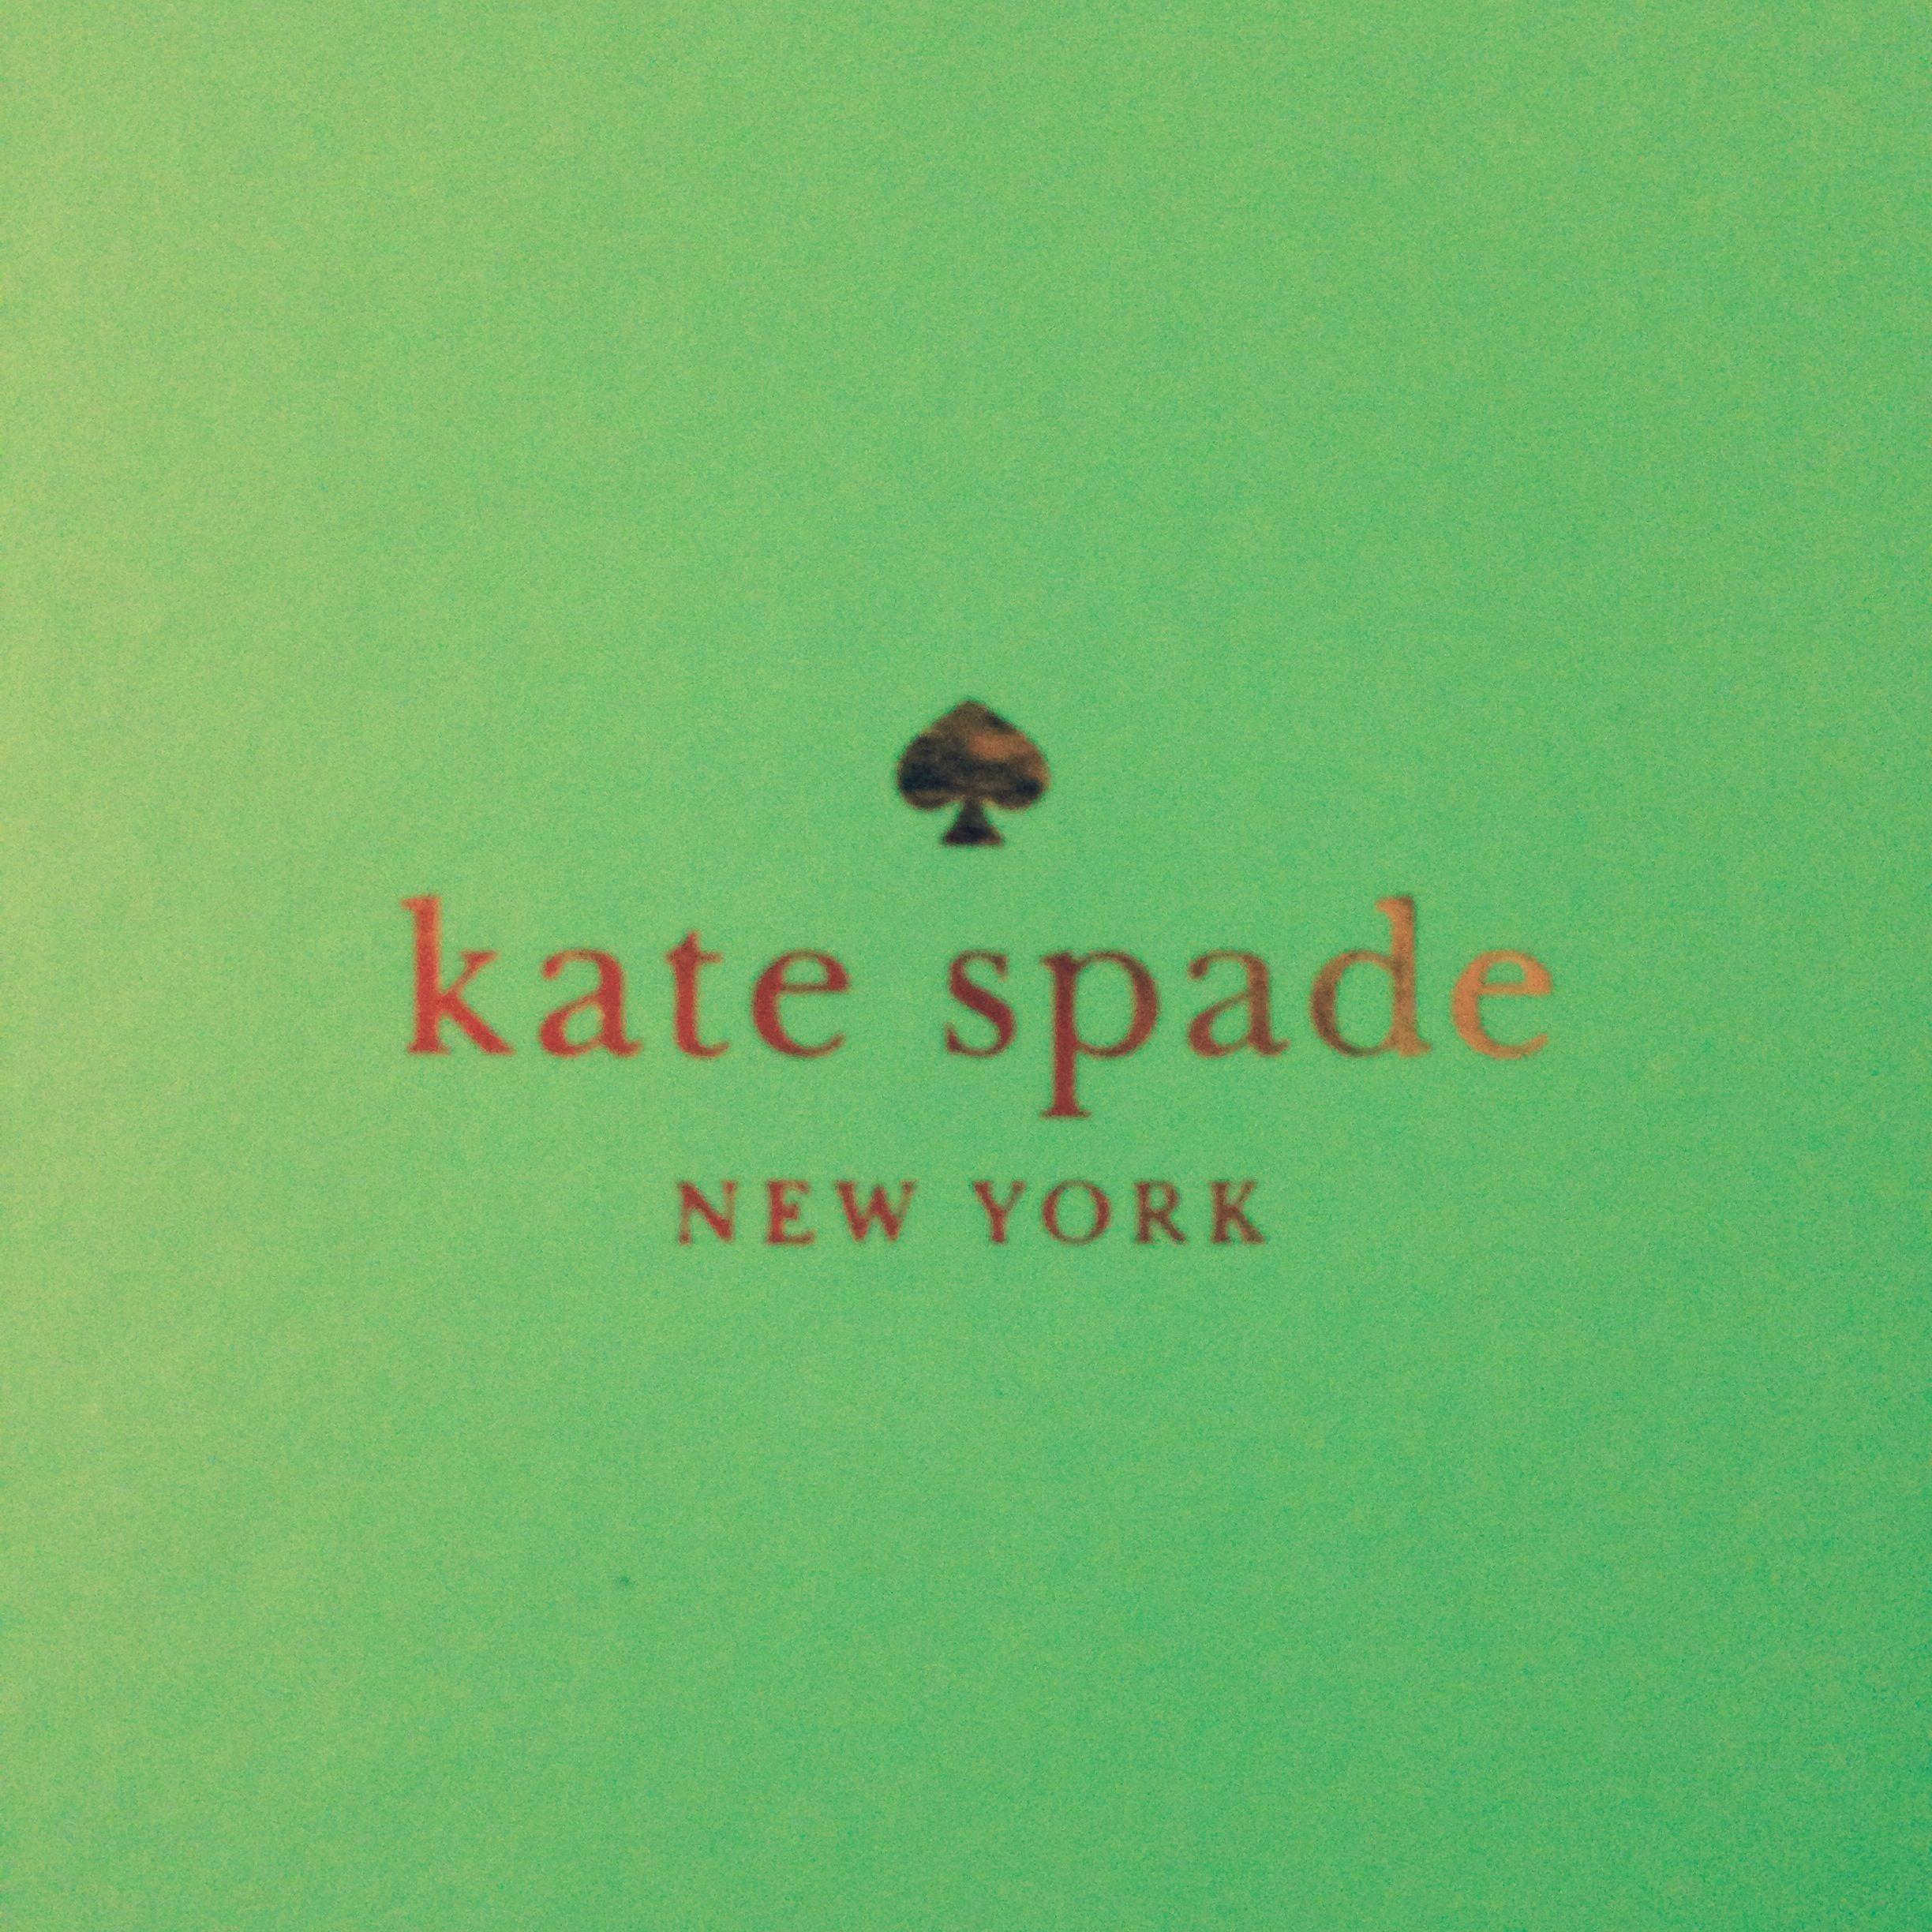 Gold Kate Spade Logo - Kate Spade | luxbrands